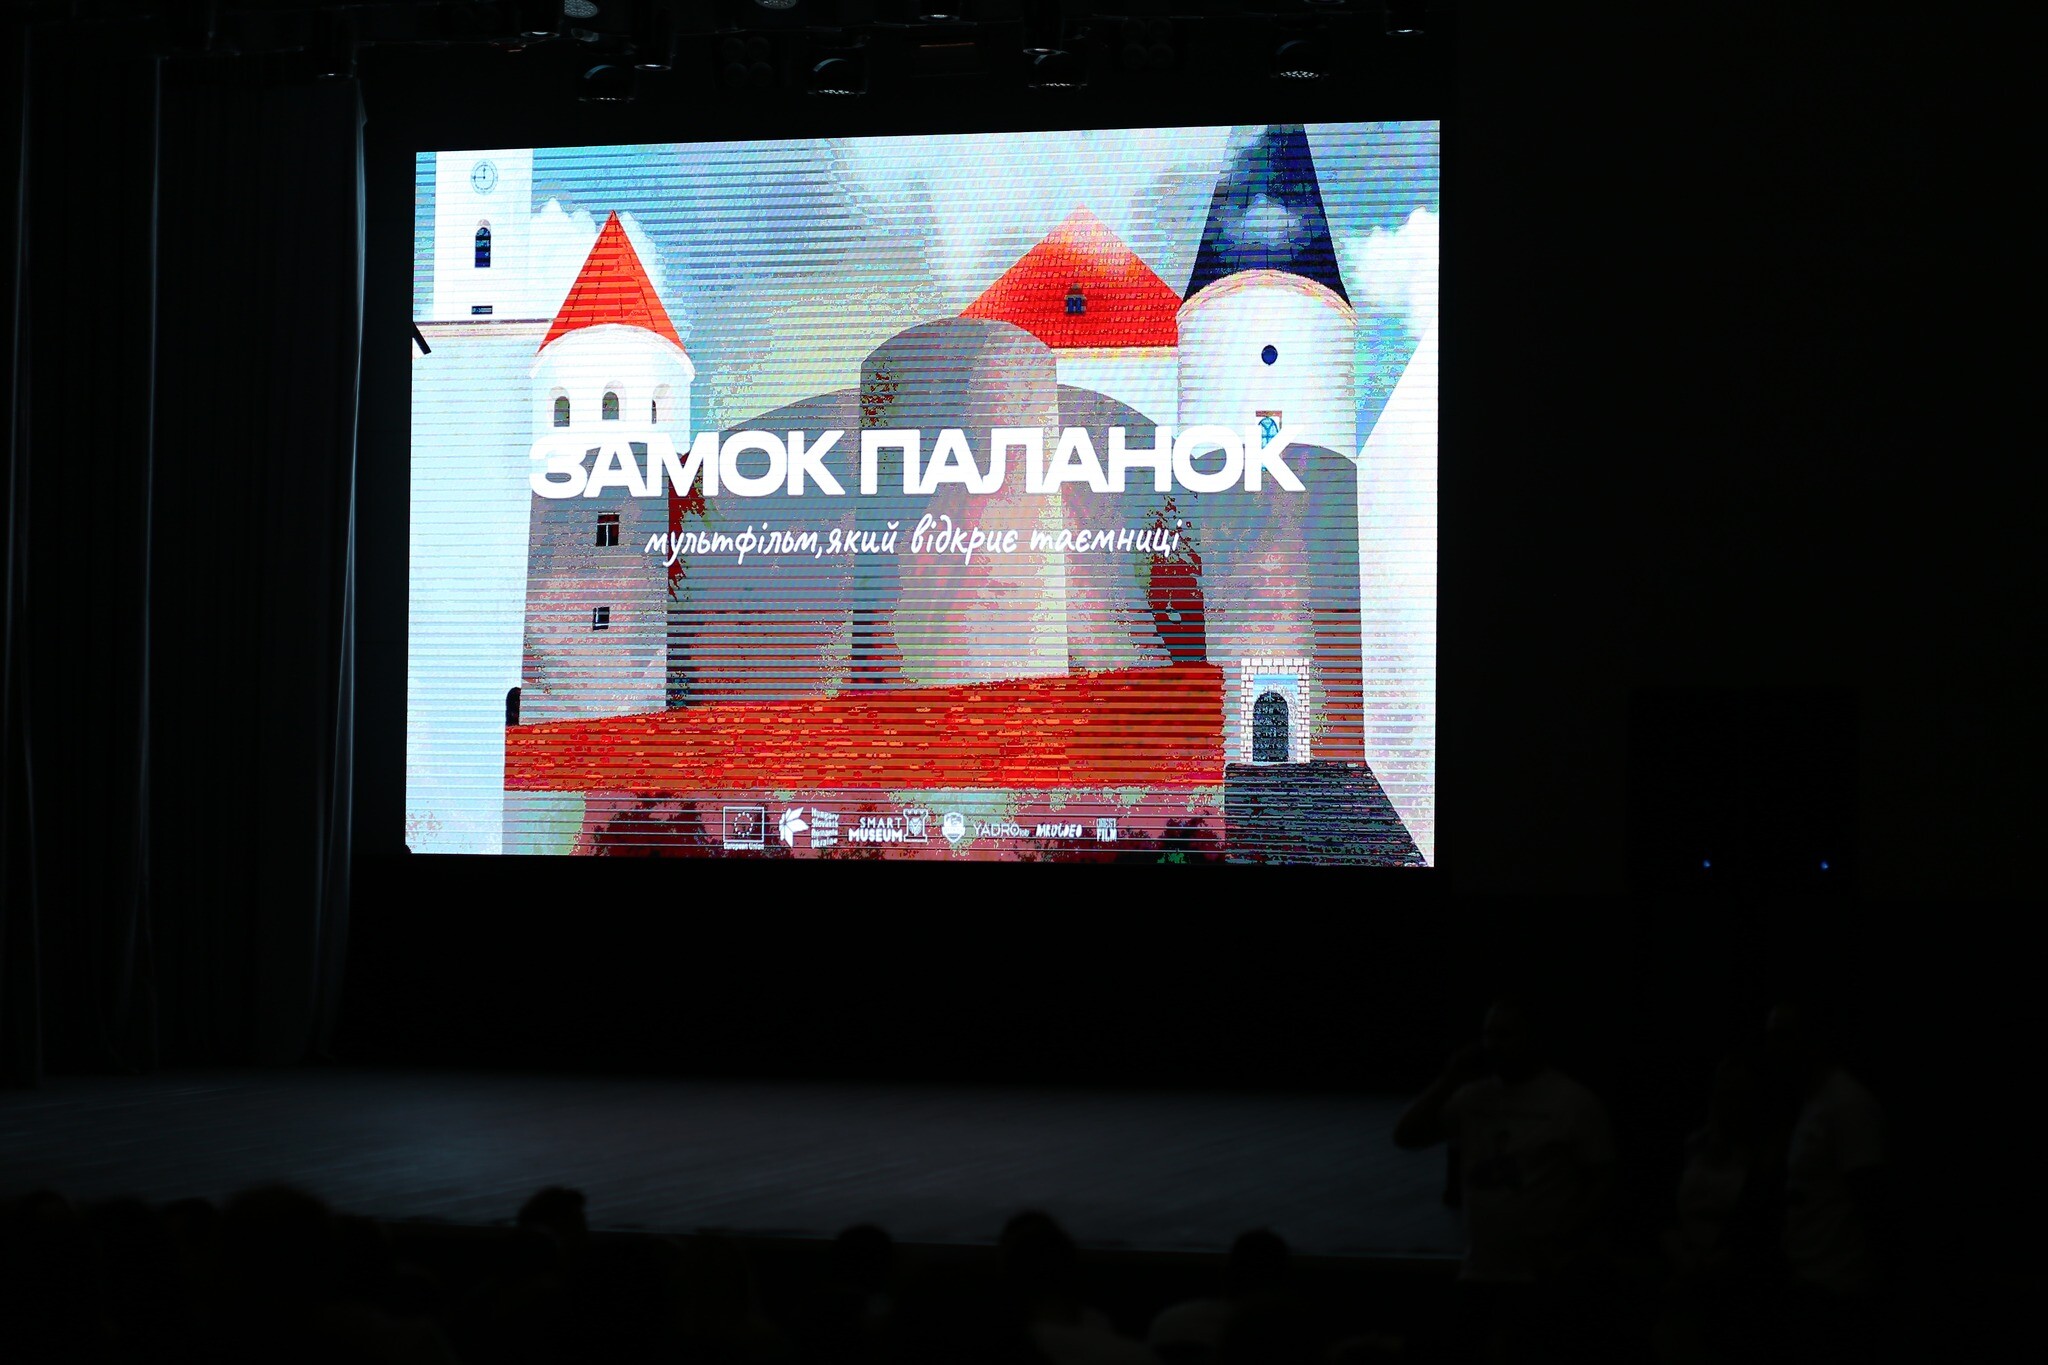 Presentation of animated film 